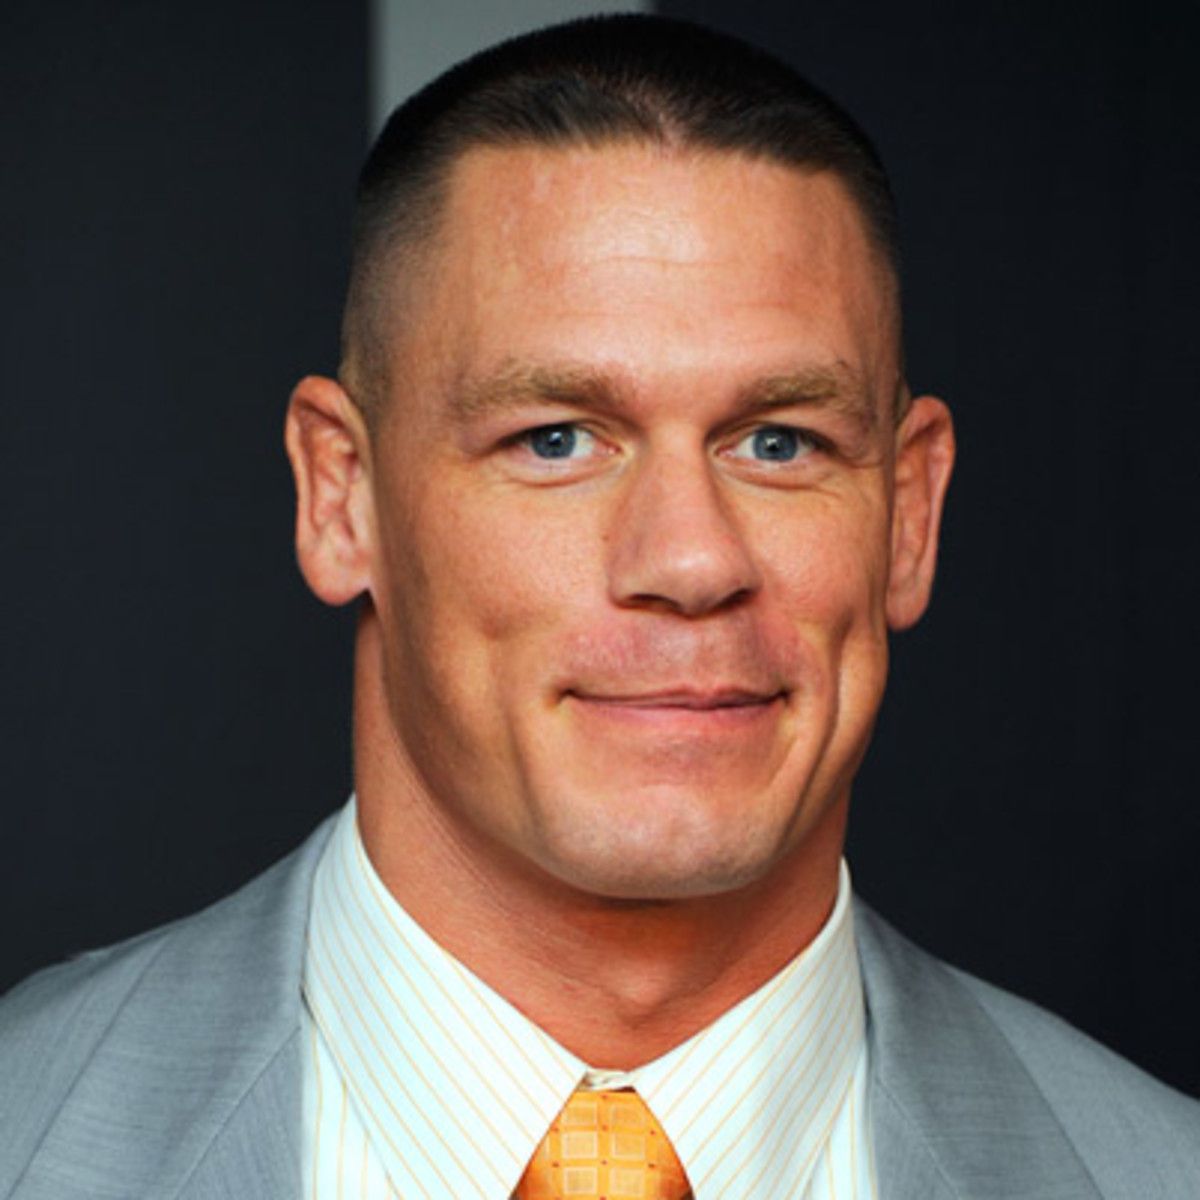 John Cena, Wrestling & Movies